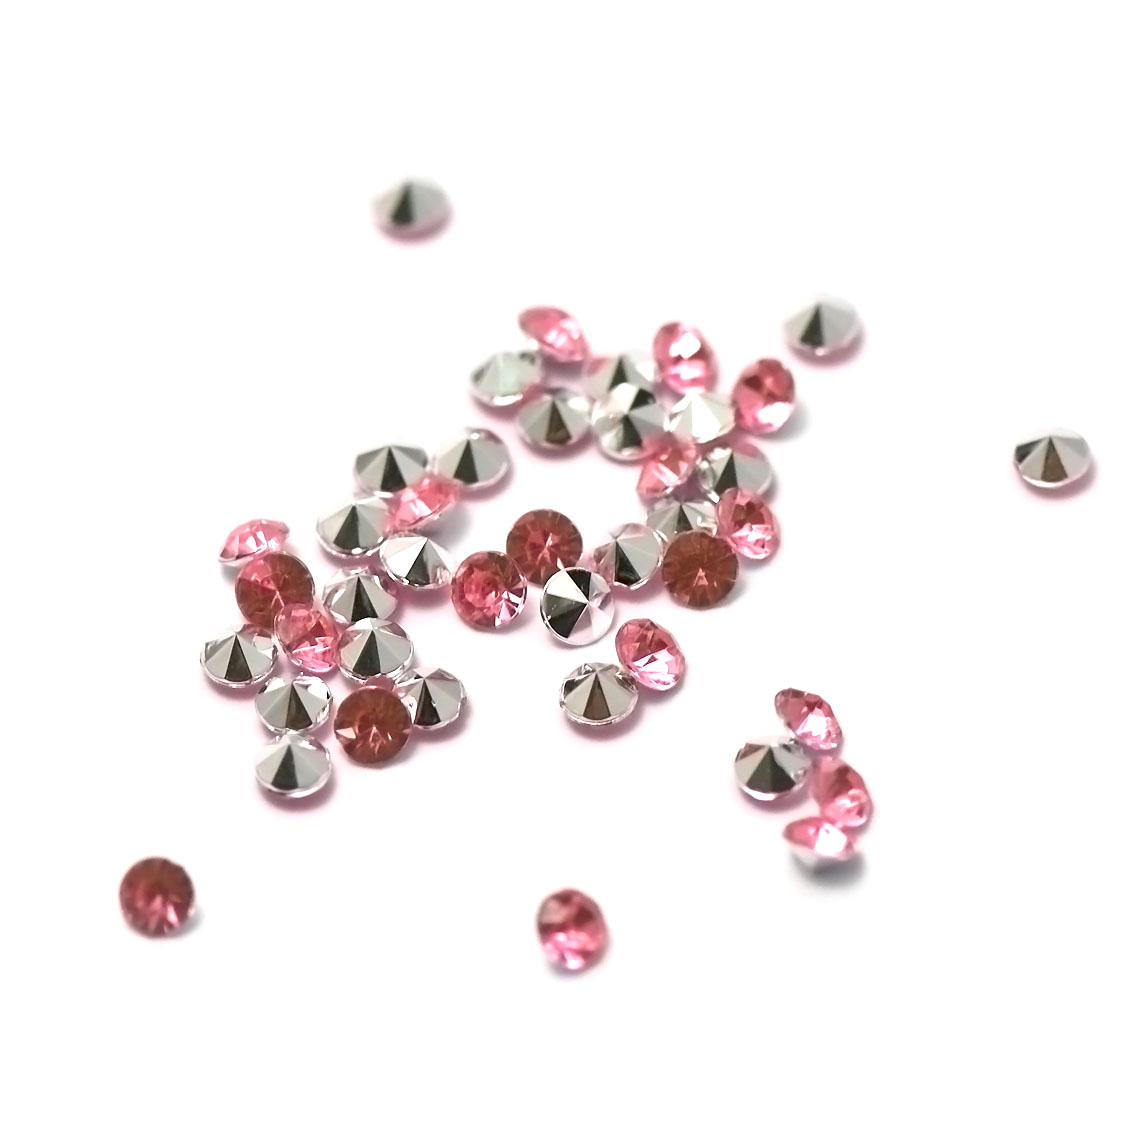 5g de perles strass en verre à coller cône 4 mm, rose